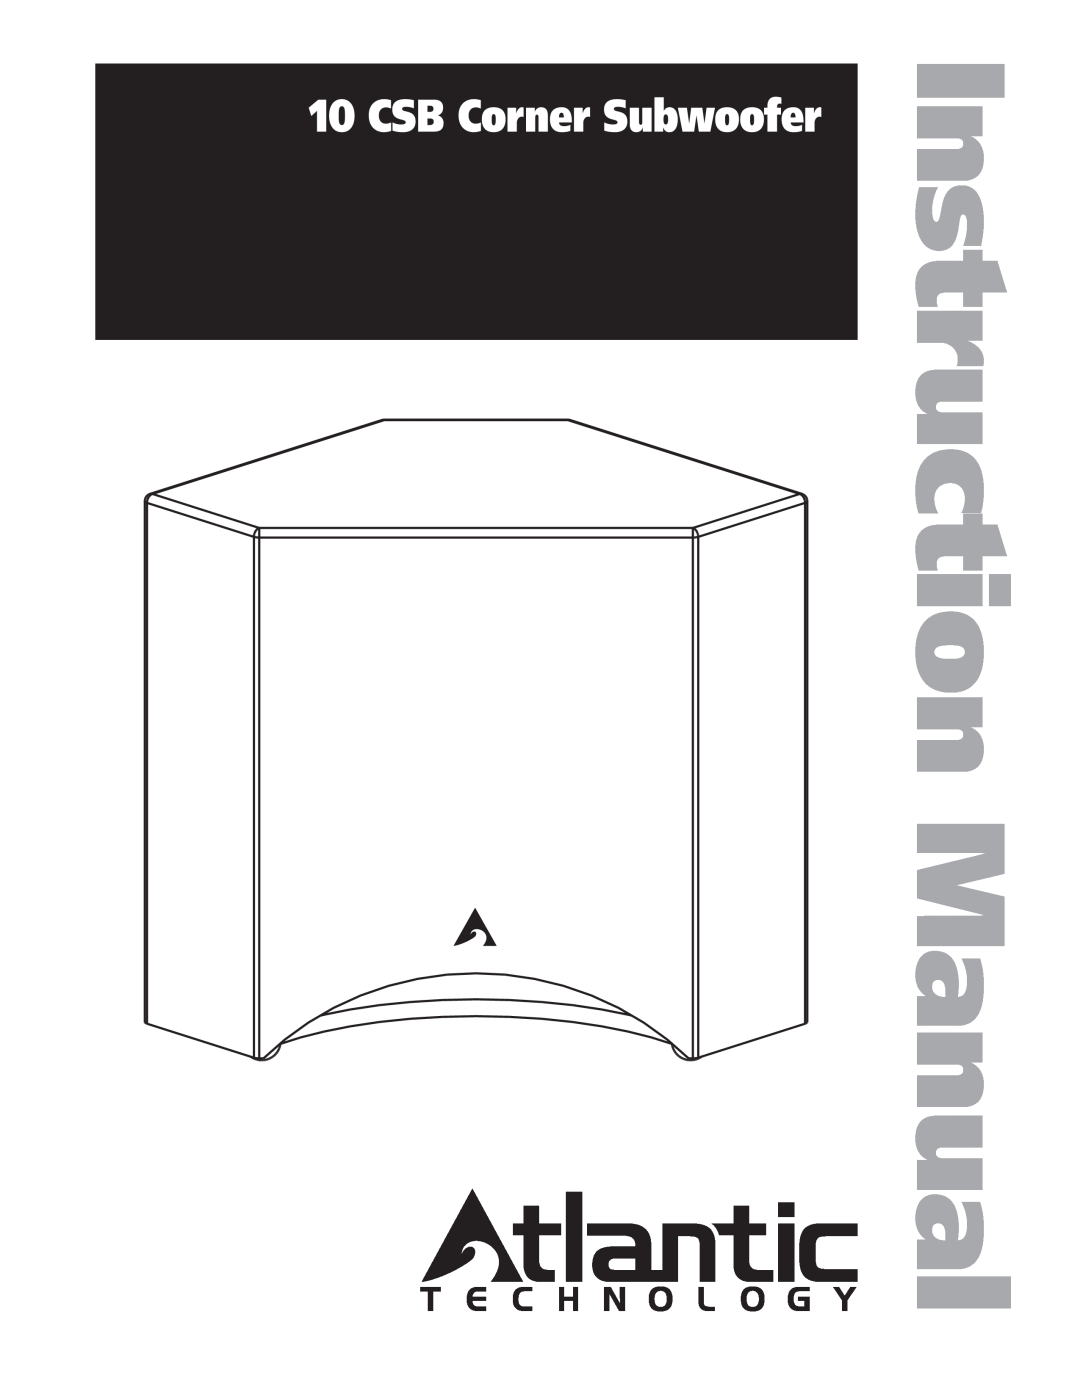 Atlantic Technology 10 CSB manual CSB Corner Subwoofer, In-CornerSubwoofers, Product Information Sheet 